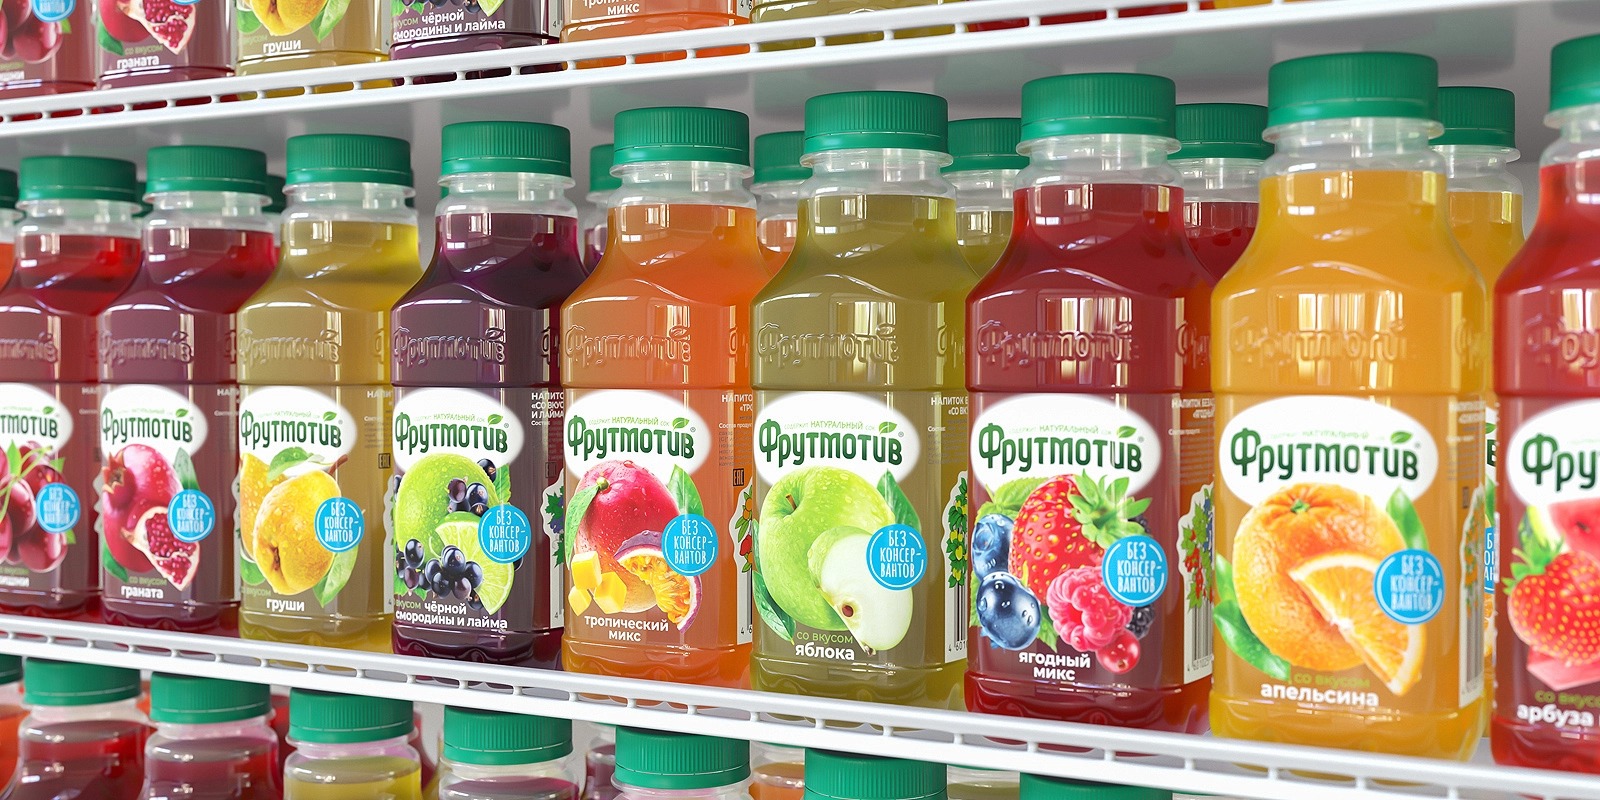 Frutmotiv果汁饮料包装设计